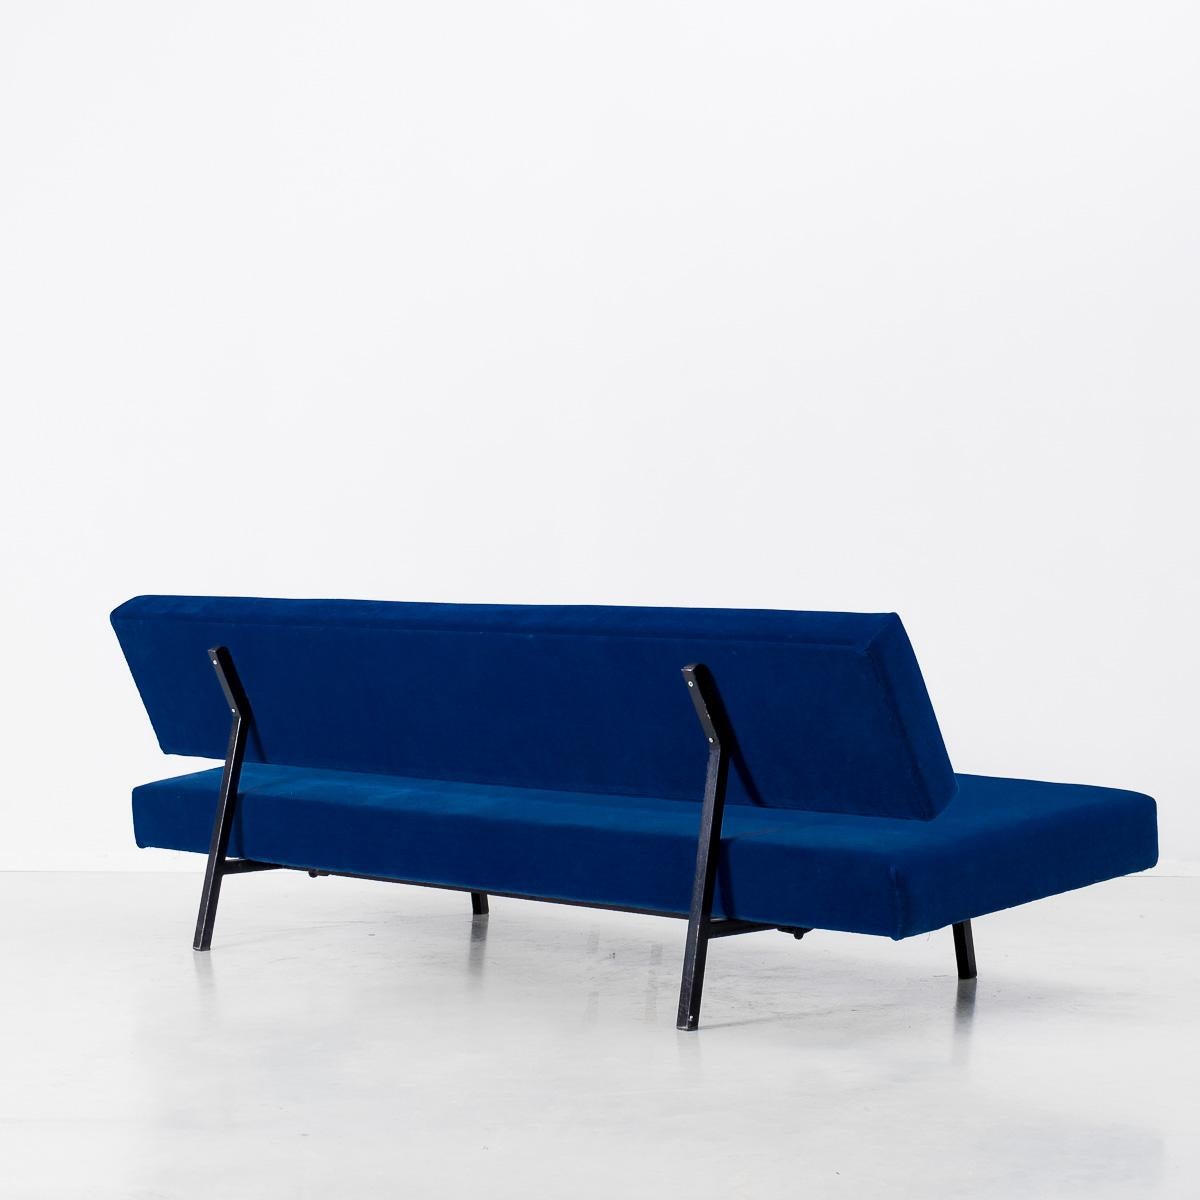 Mid-Century Modern Sofa or Sofa Bed by Martin Visser for ‘t Spectrum, Netherlands 1950s